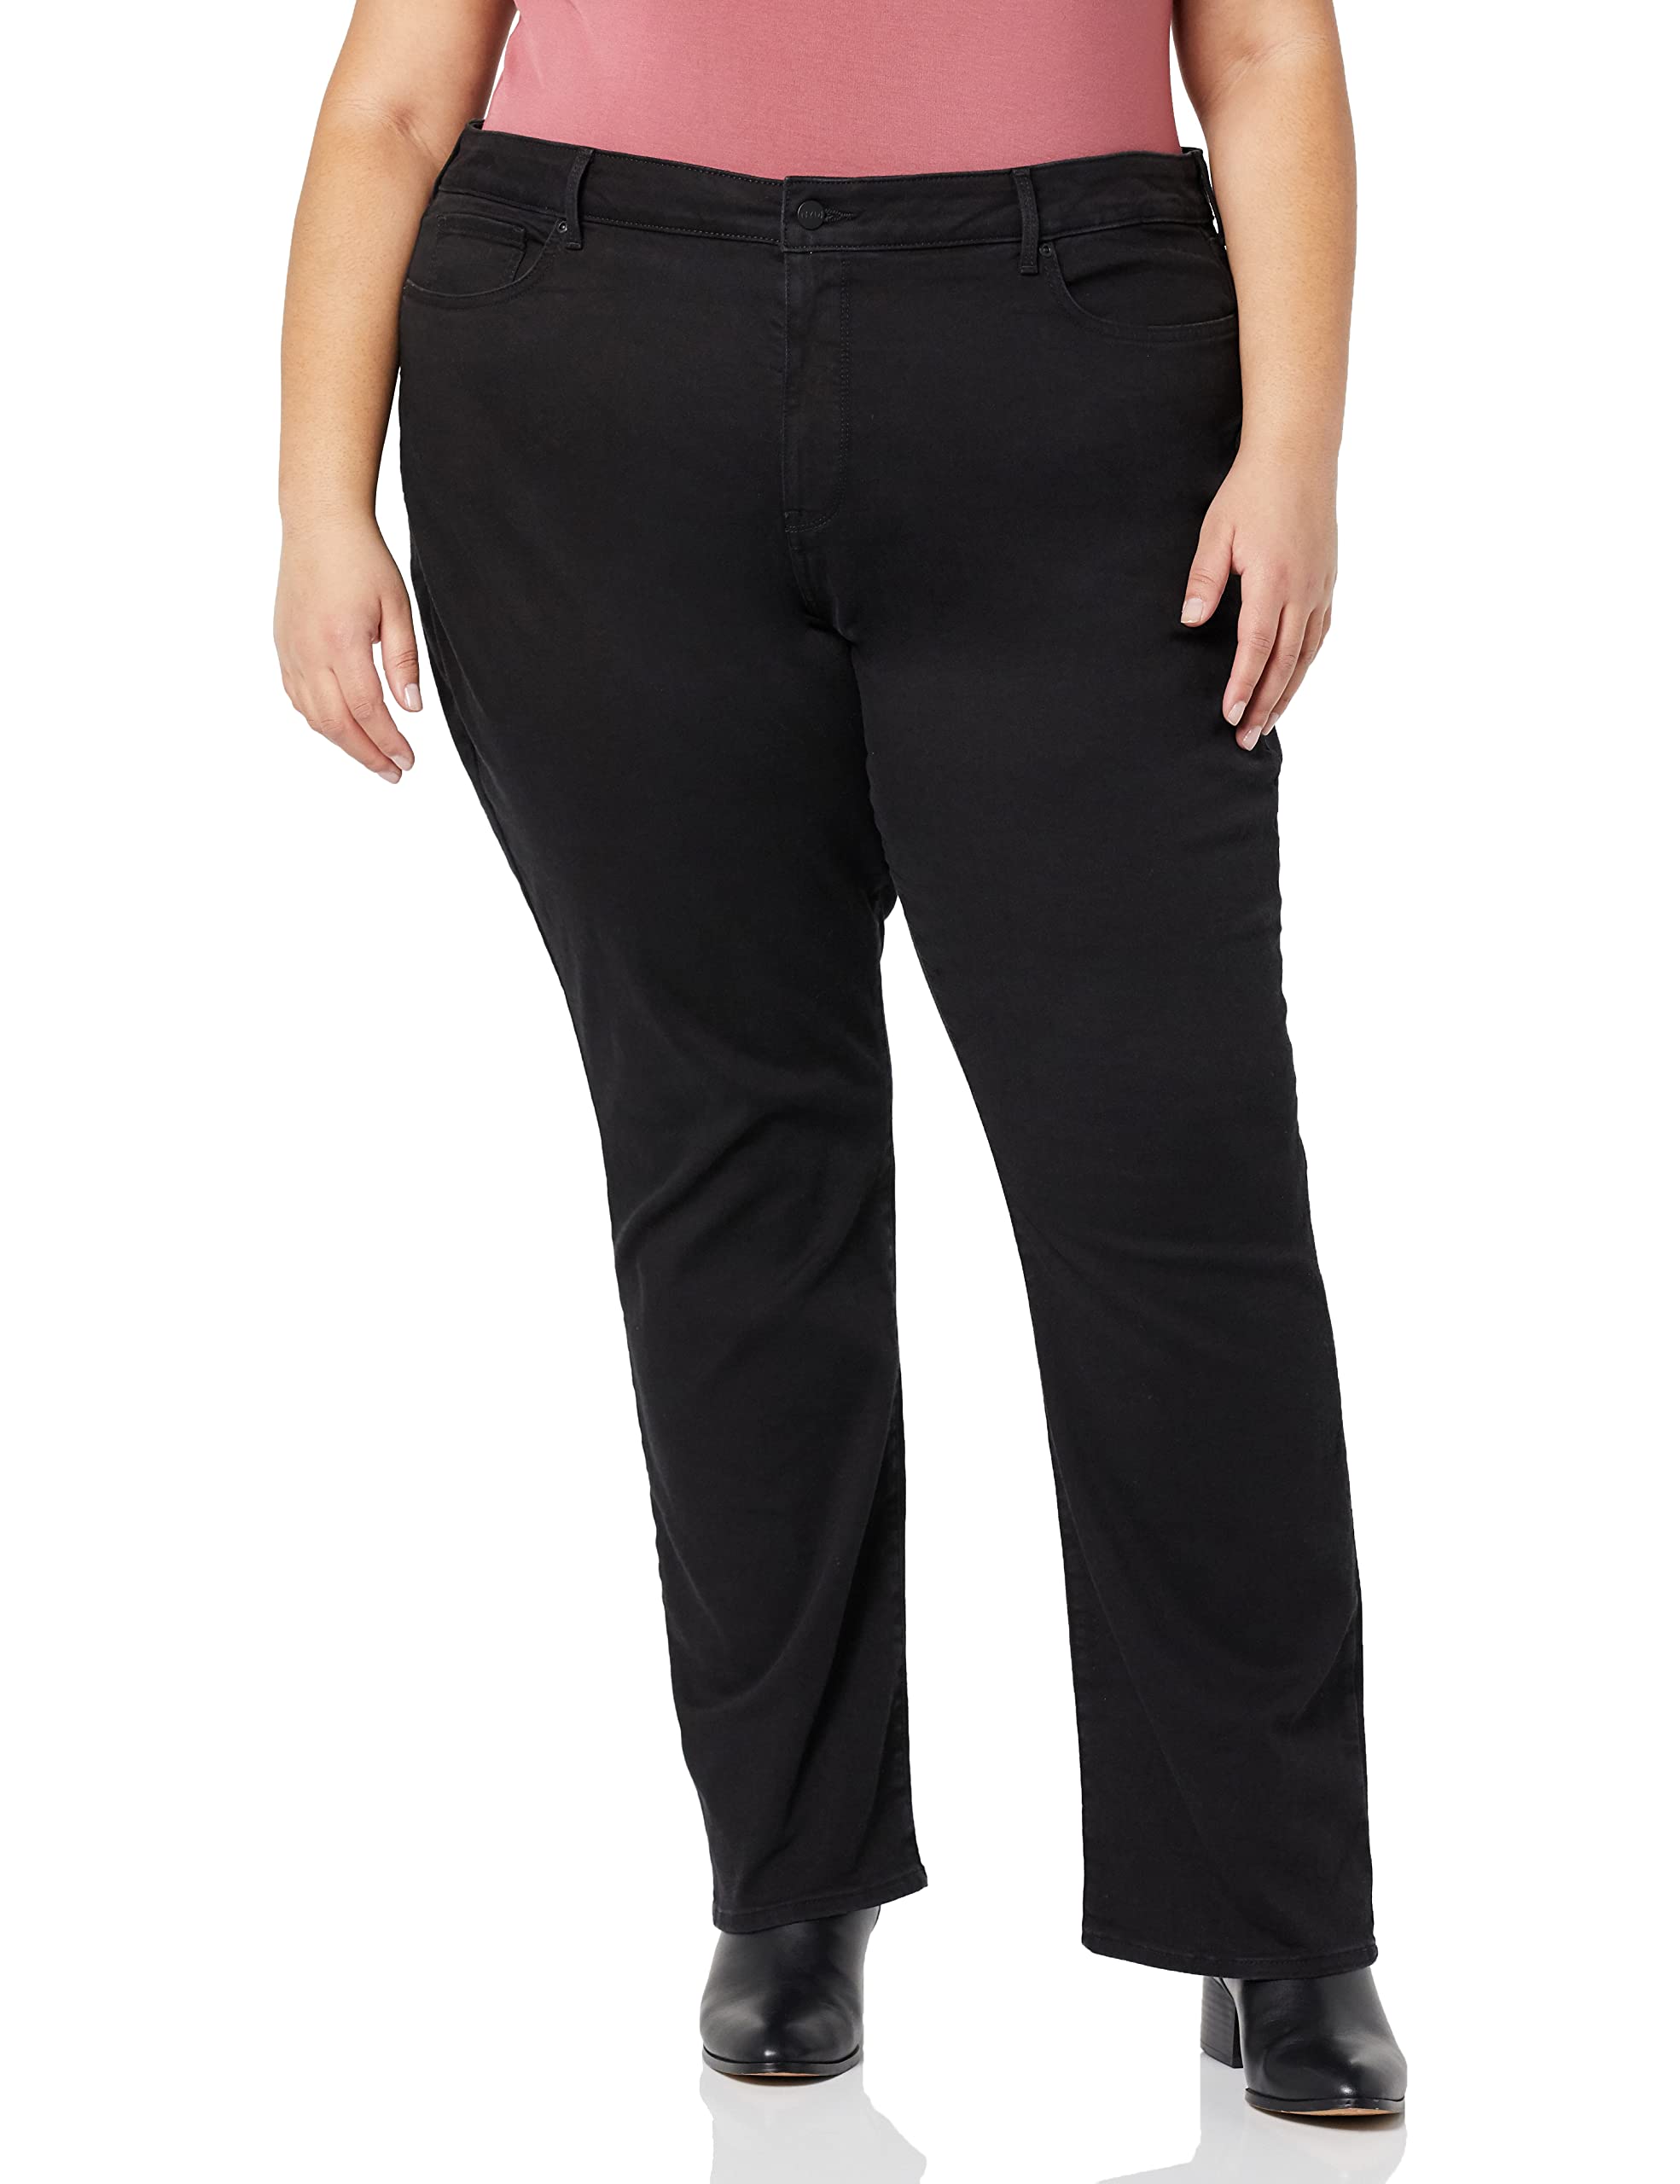 NYDJ Women's Size Marilyn Straight Ankle Jeans | Slimming & Flattering Fit, Black, 20 Plus